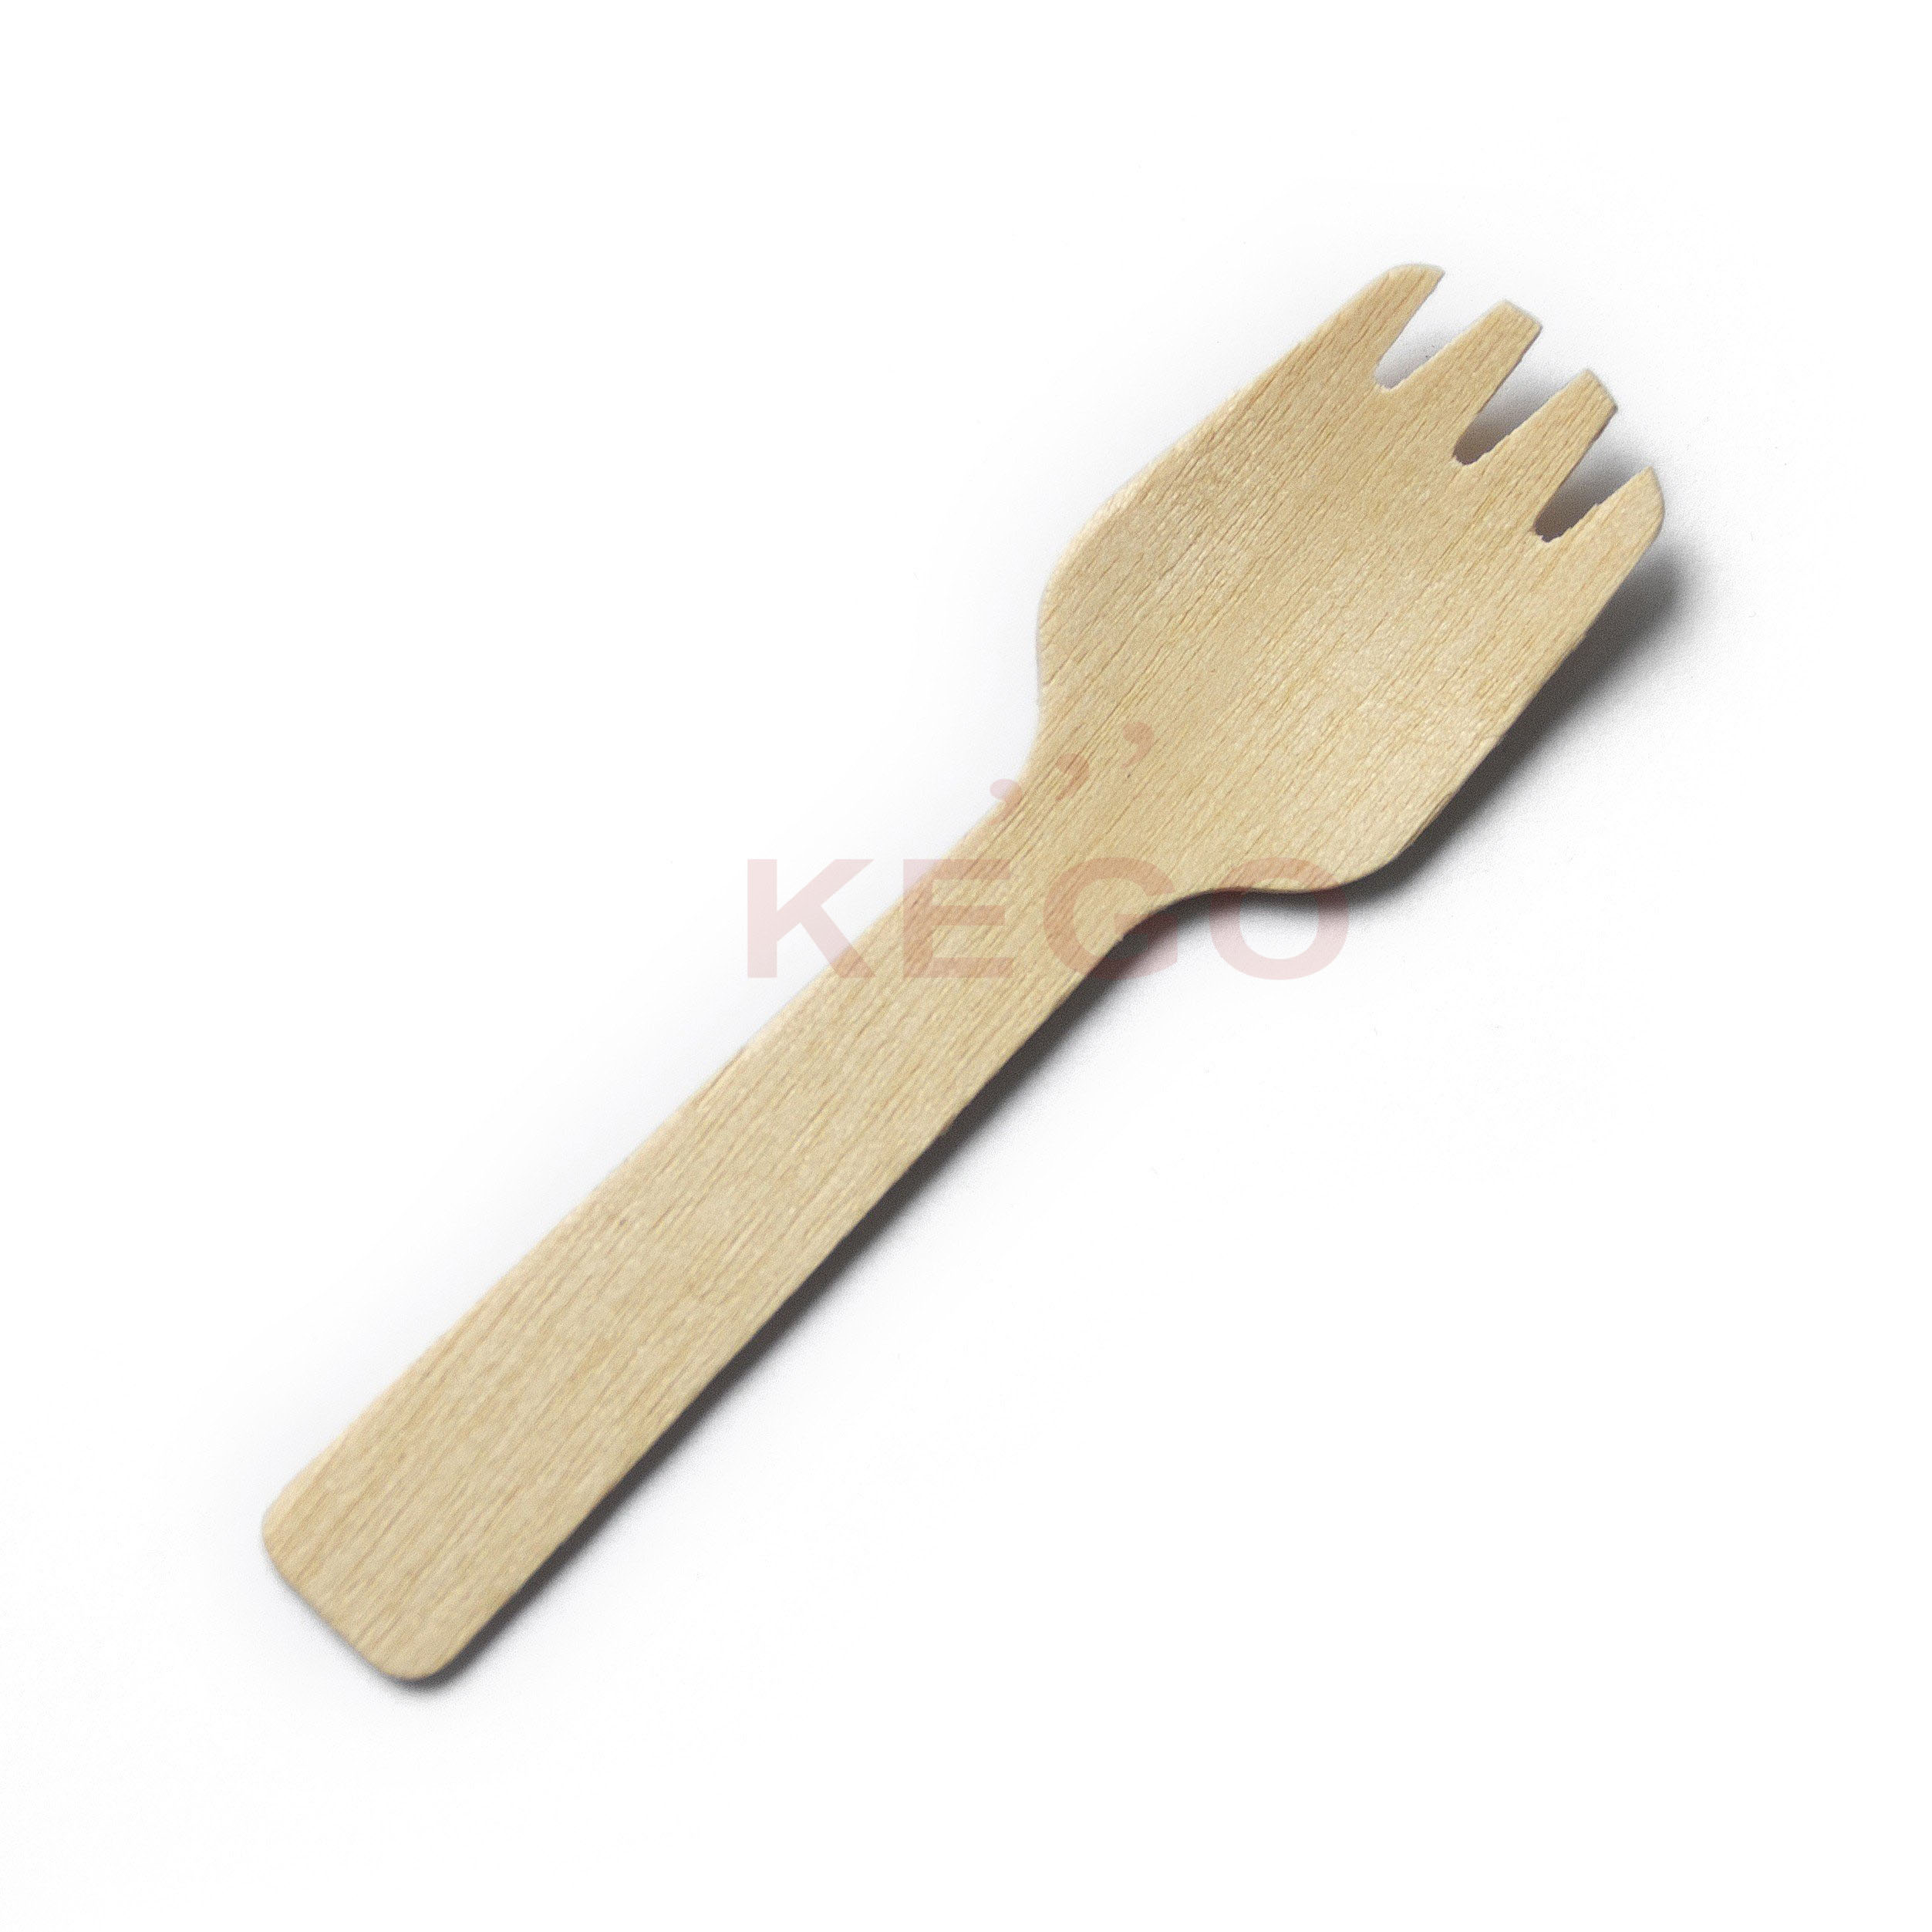 https://kego.vn/wp-content/uploads/2015/09/Disposable-Wooden-Fork-95-2.jpg